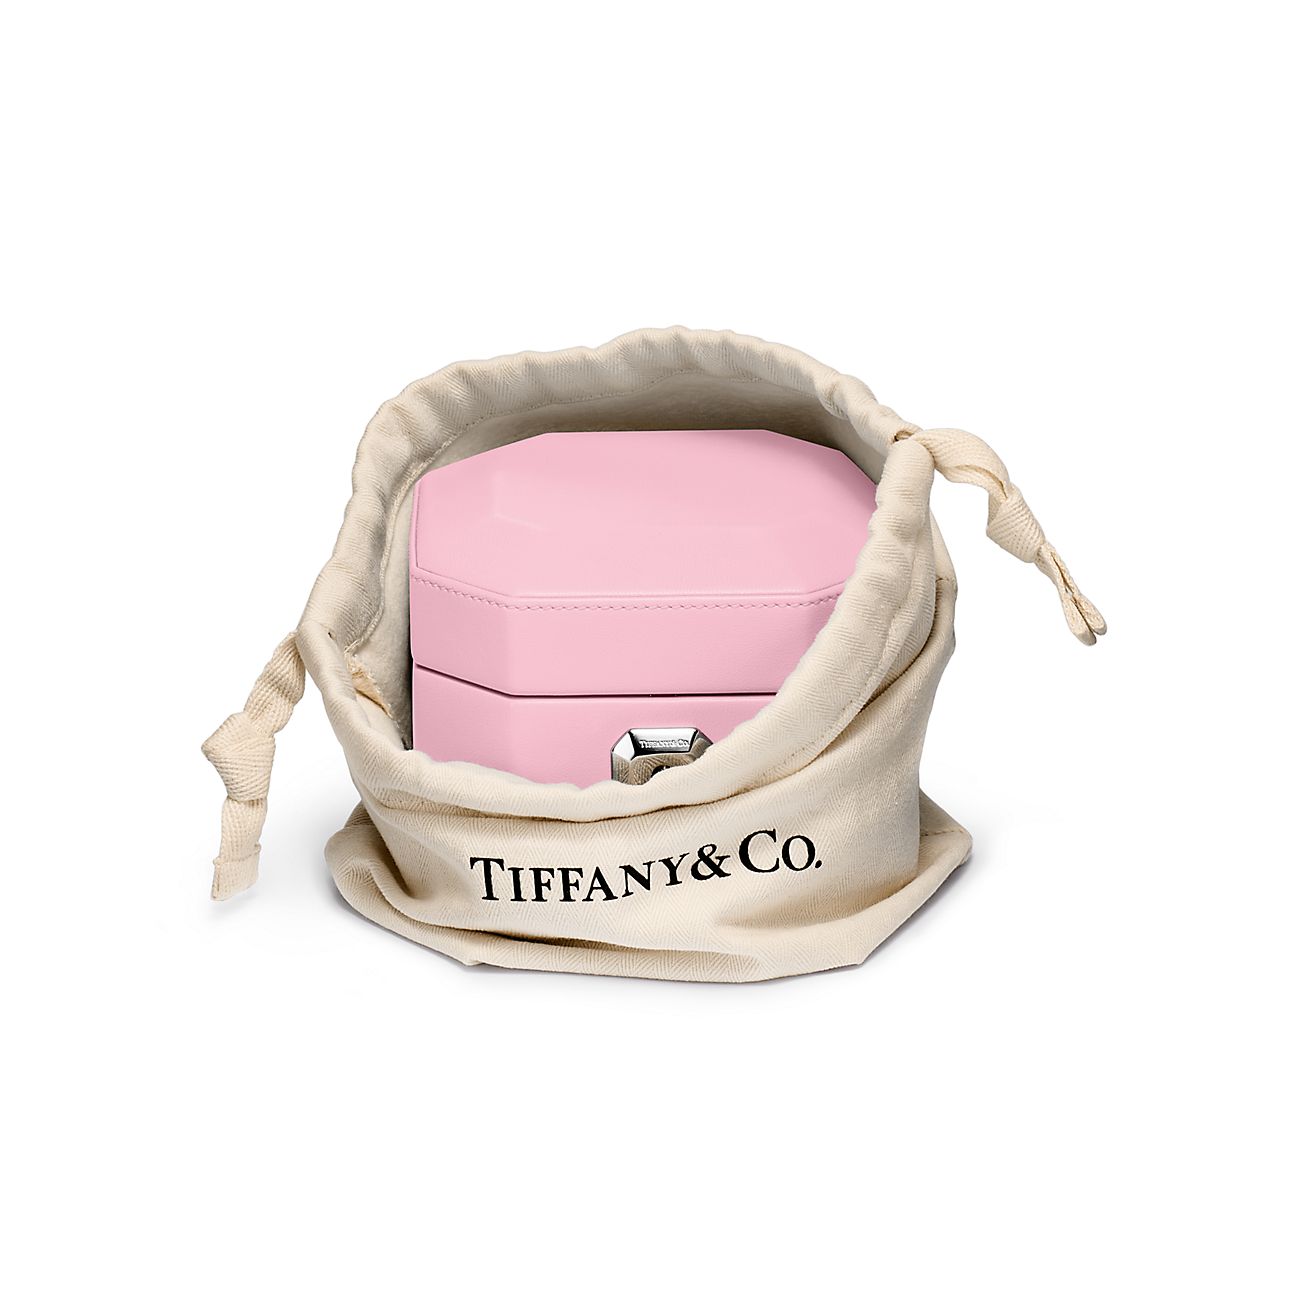 Tiffany Facets Small Jewelry Box in Morganite-colored Leather 